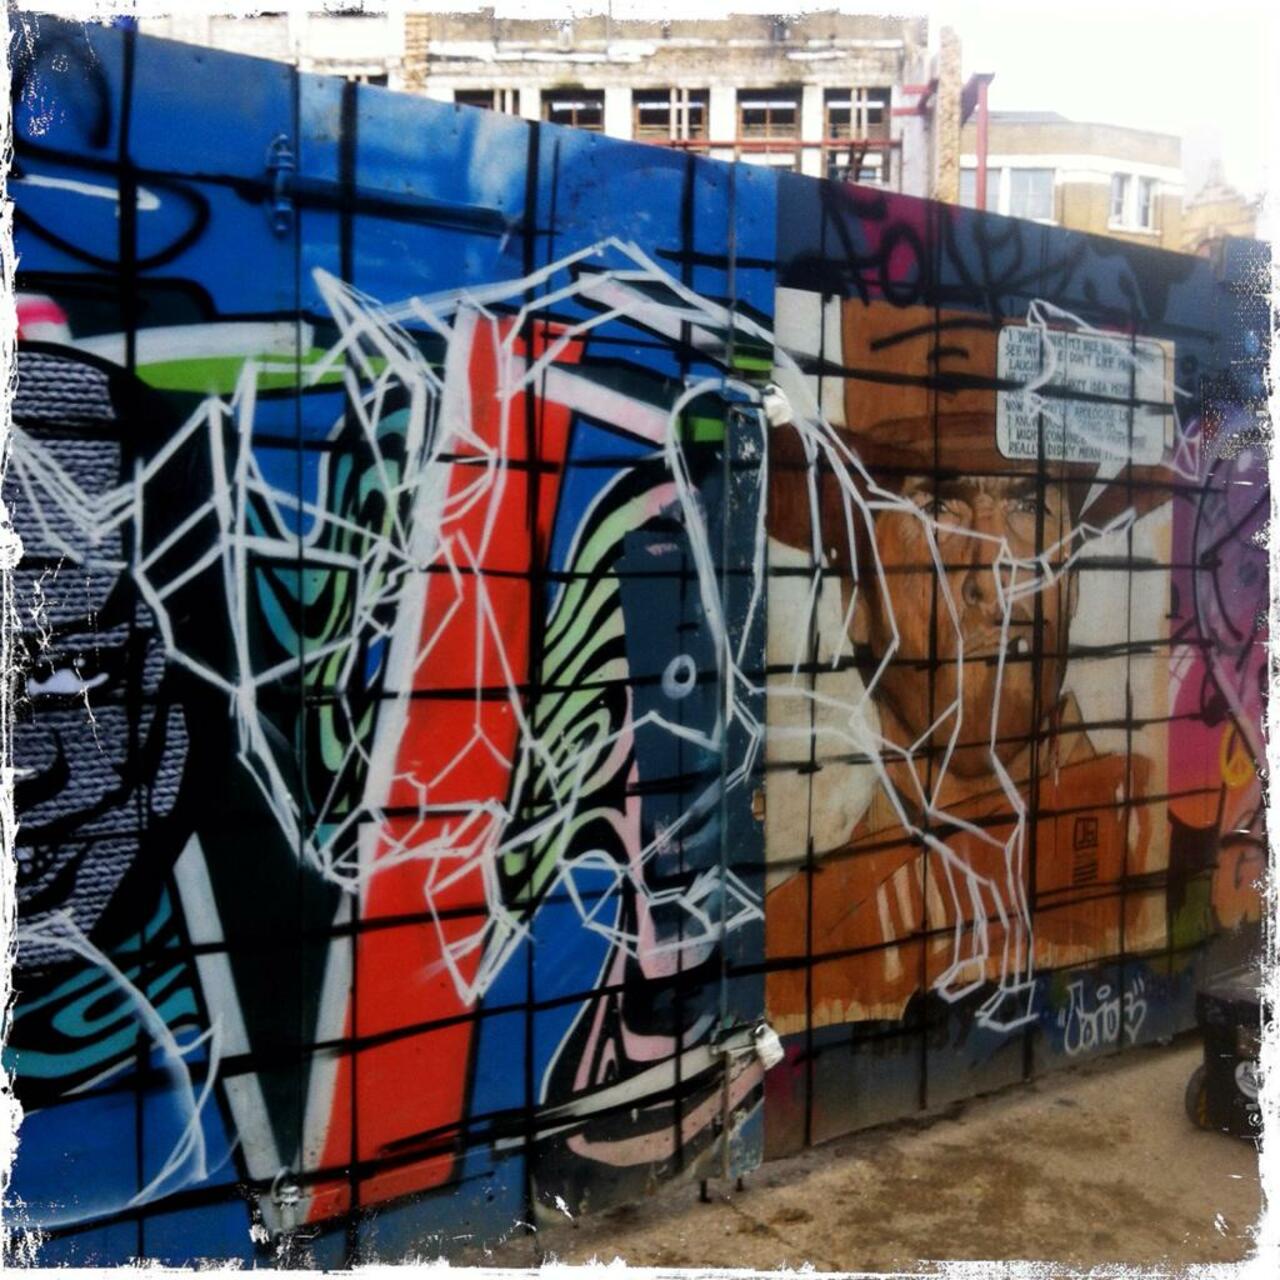 RT @BrickLaneArt: Early prelim work by @AirborneMark on Leonard Street this lunchtime #art #streetart #graffiti http://t.co/ZulGLPdh4Q